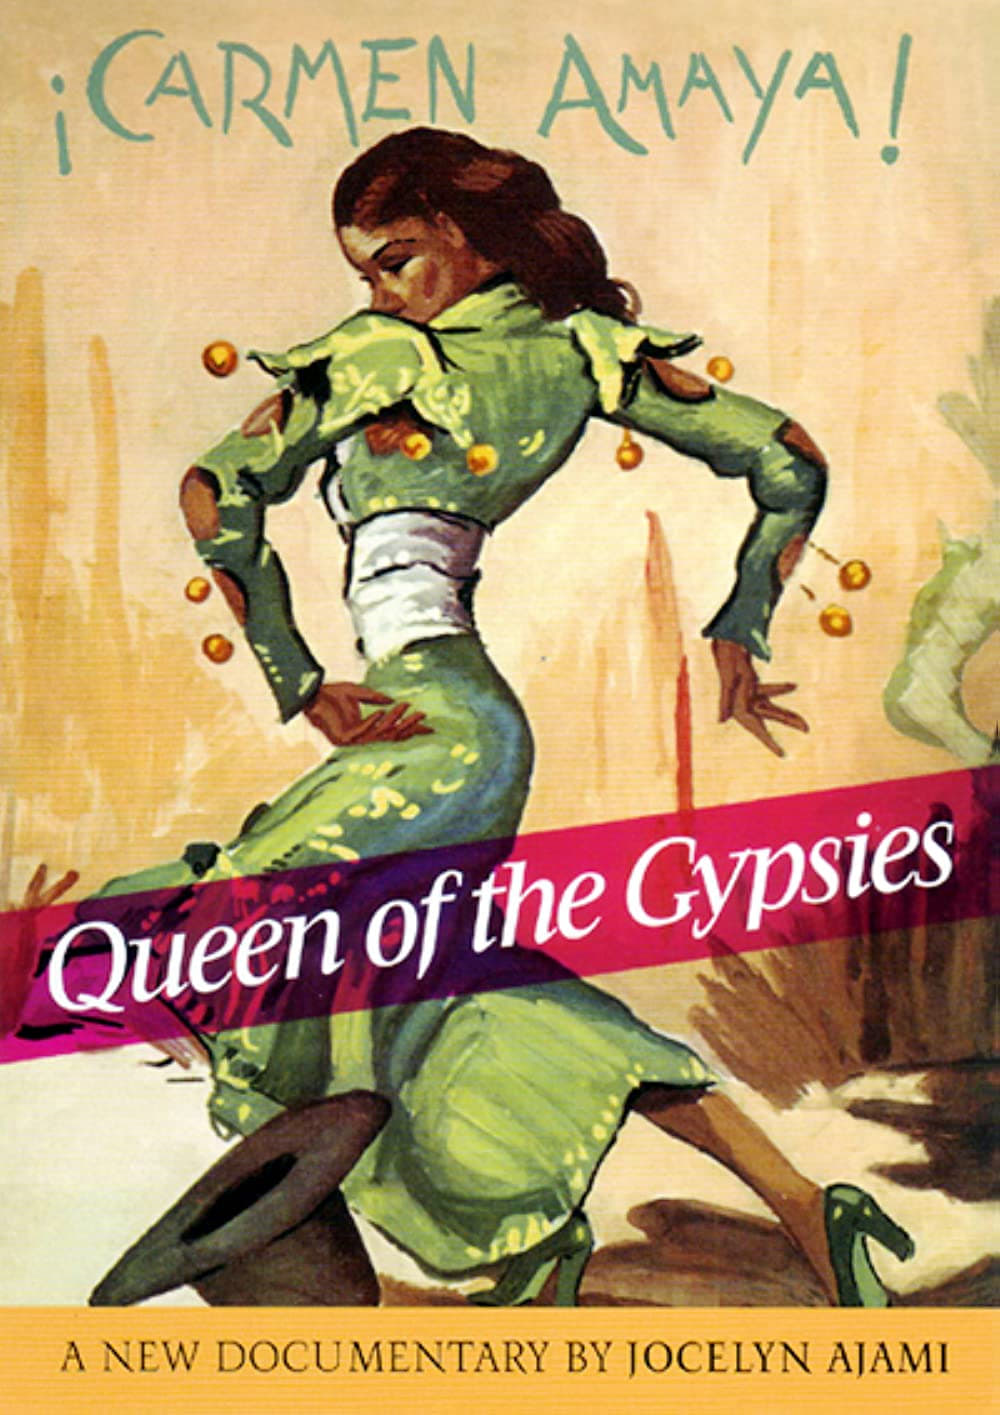 Queen of the Gypsies